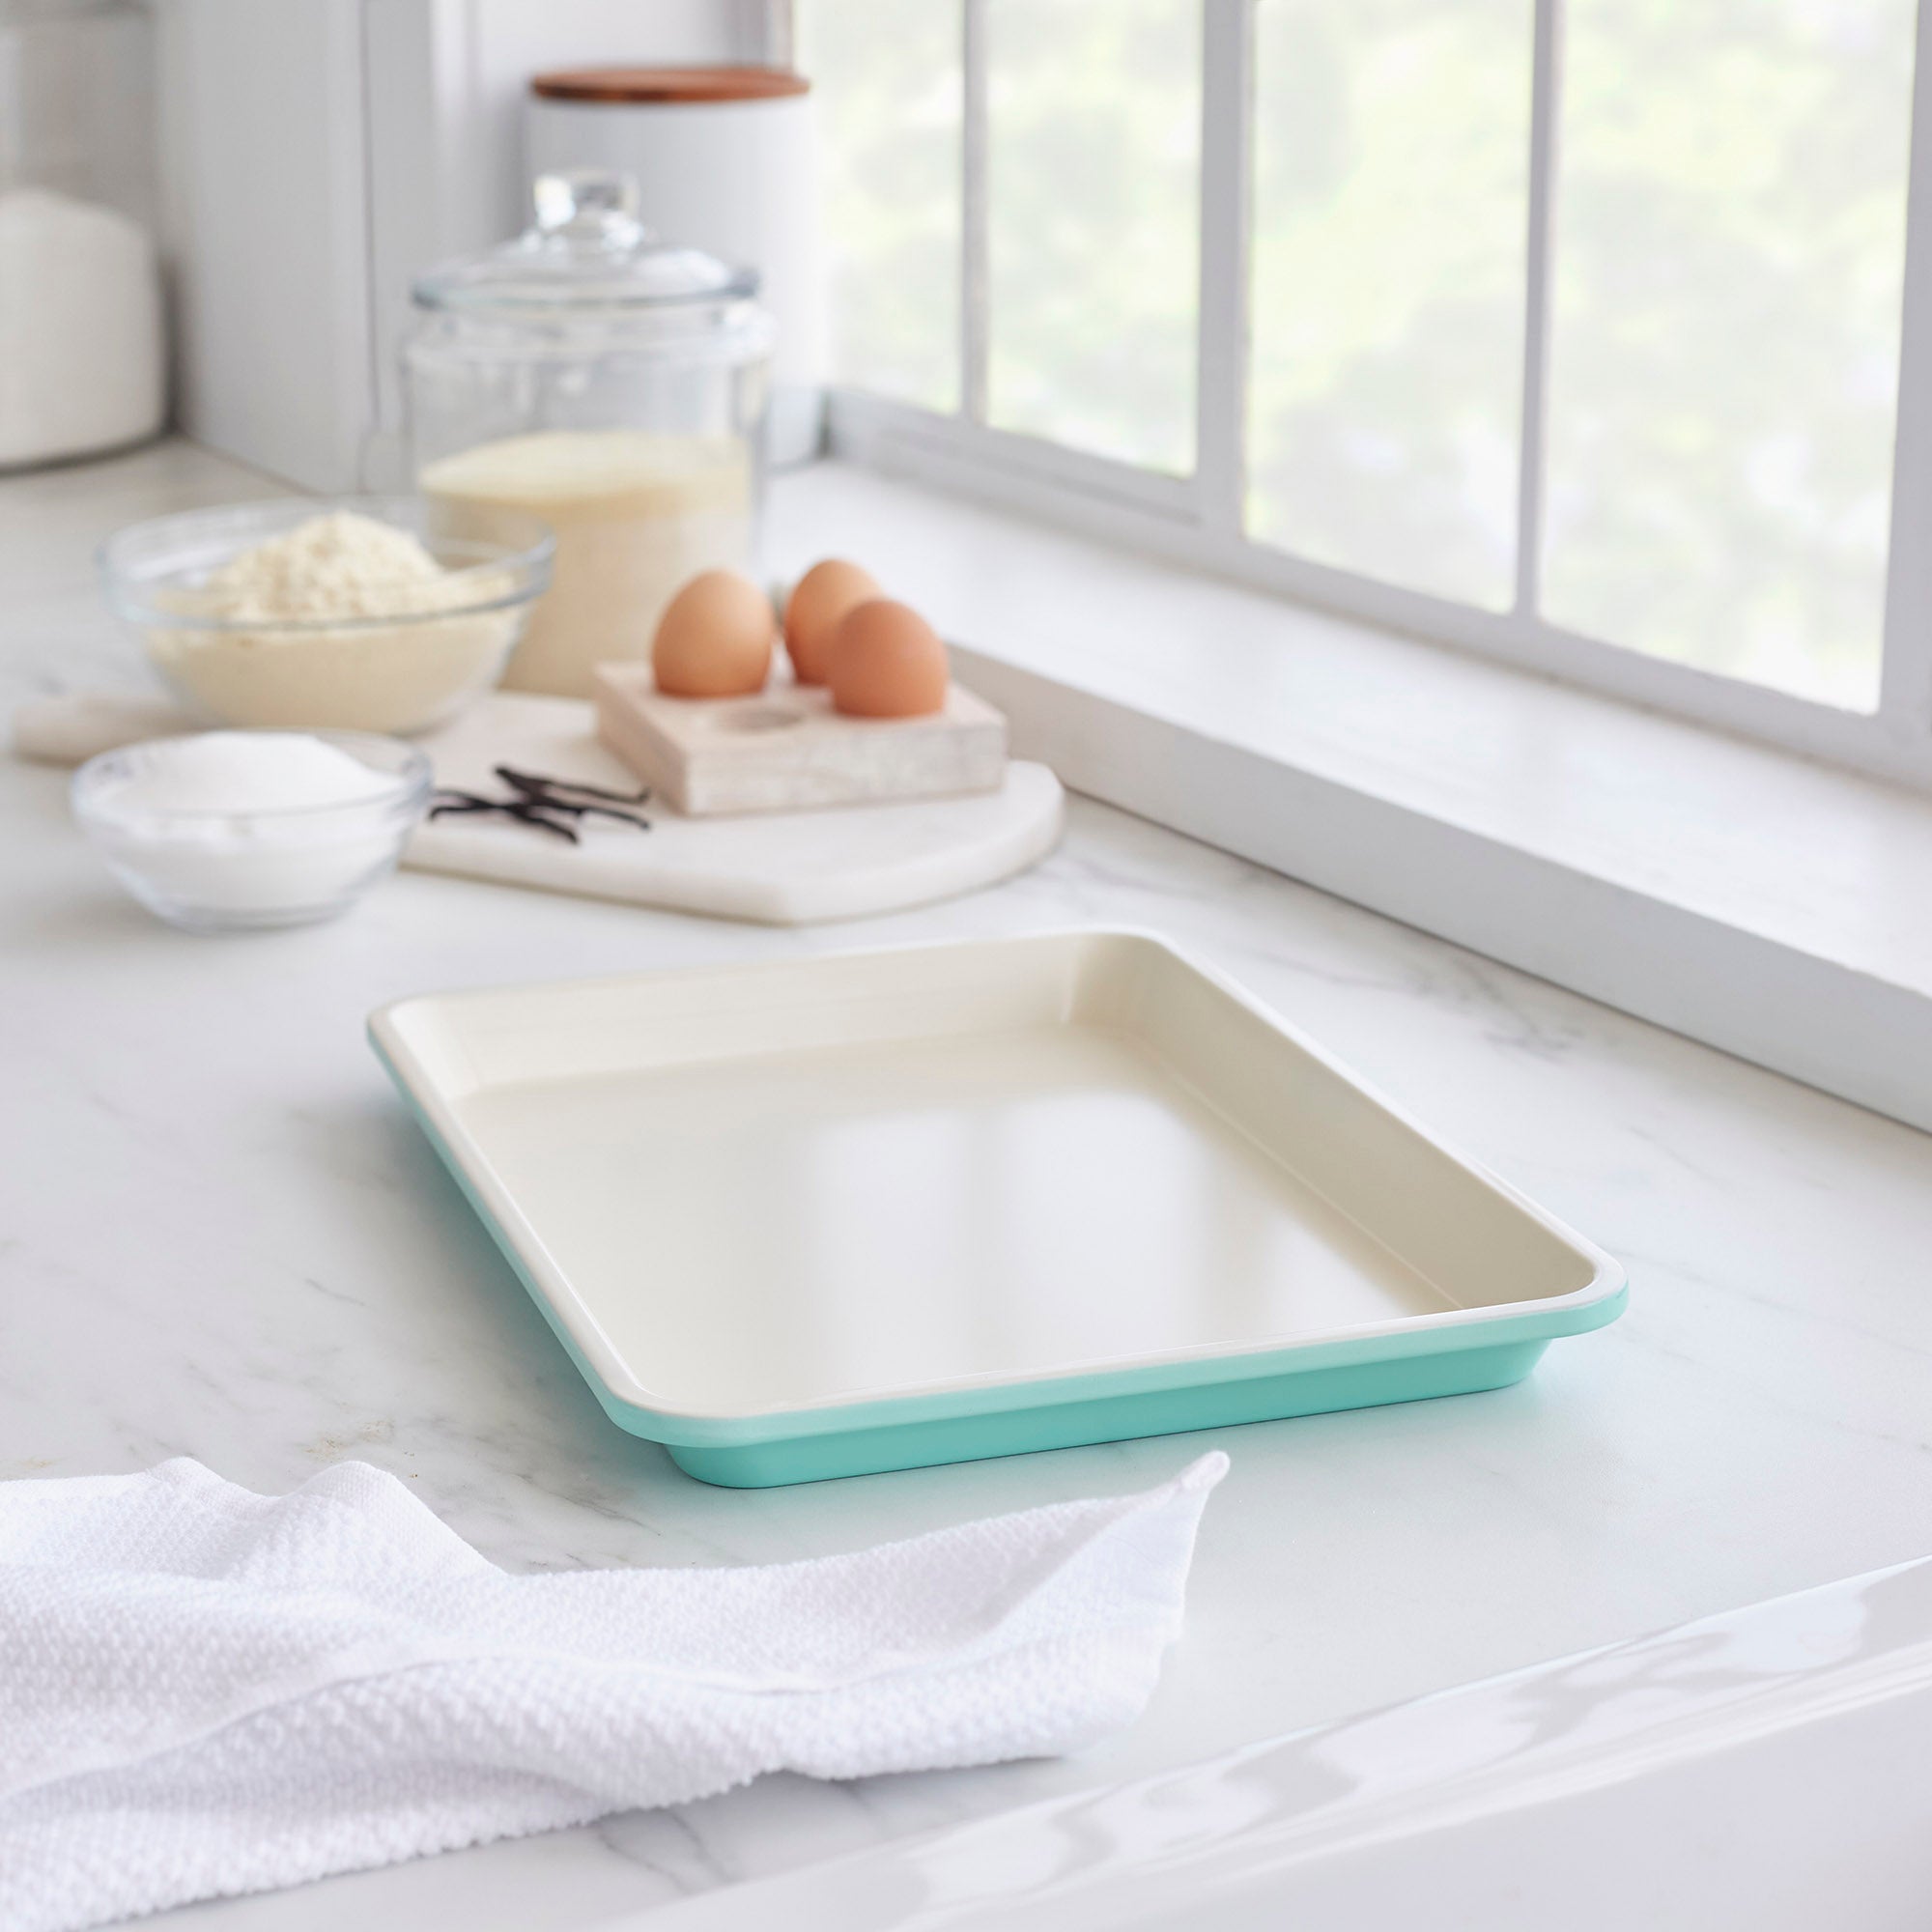 GreenLife Bakeware Healthy Ceramic Nonstick, 18 x 12 Half Cookie Sheet Baking Pan, PFAS-Free, Pink